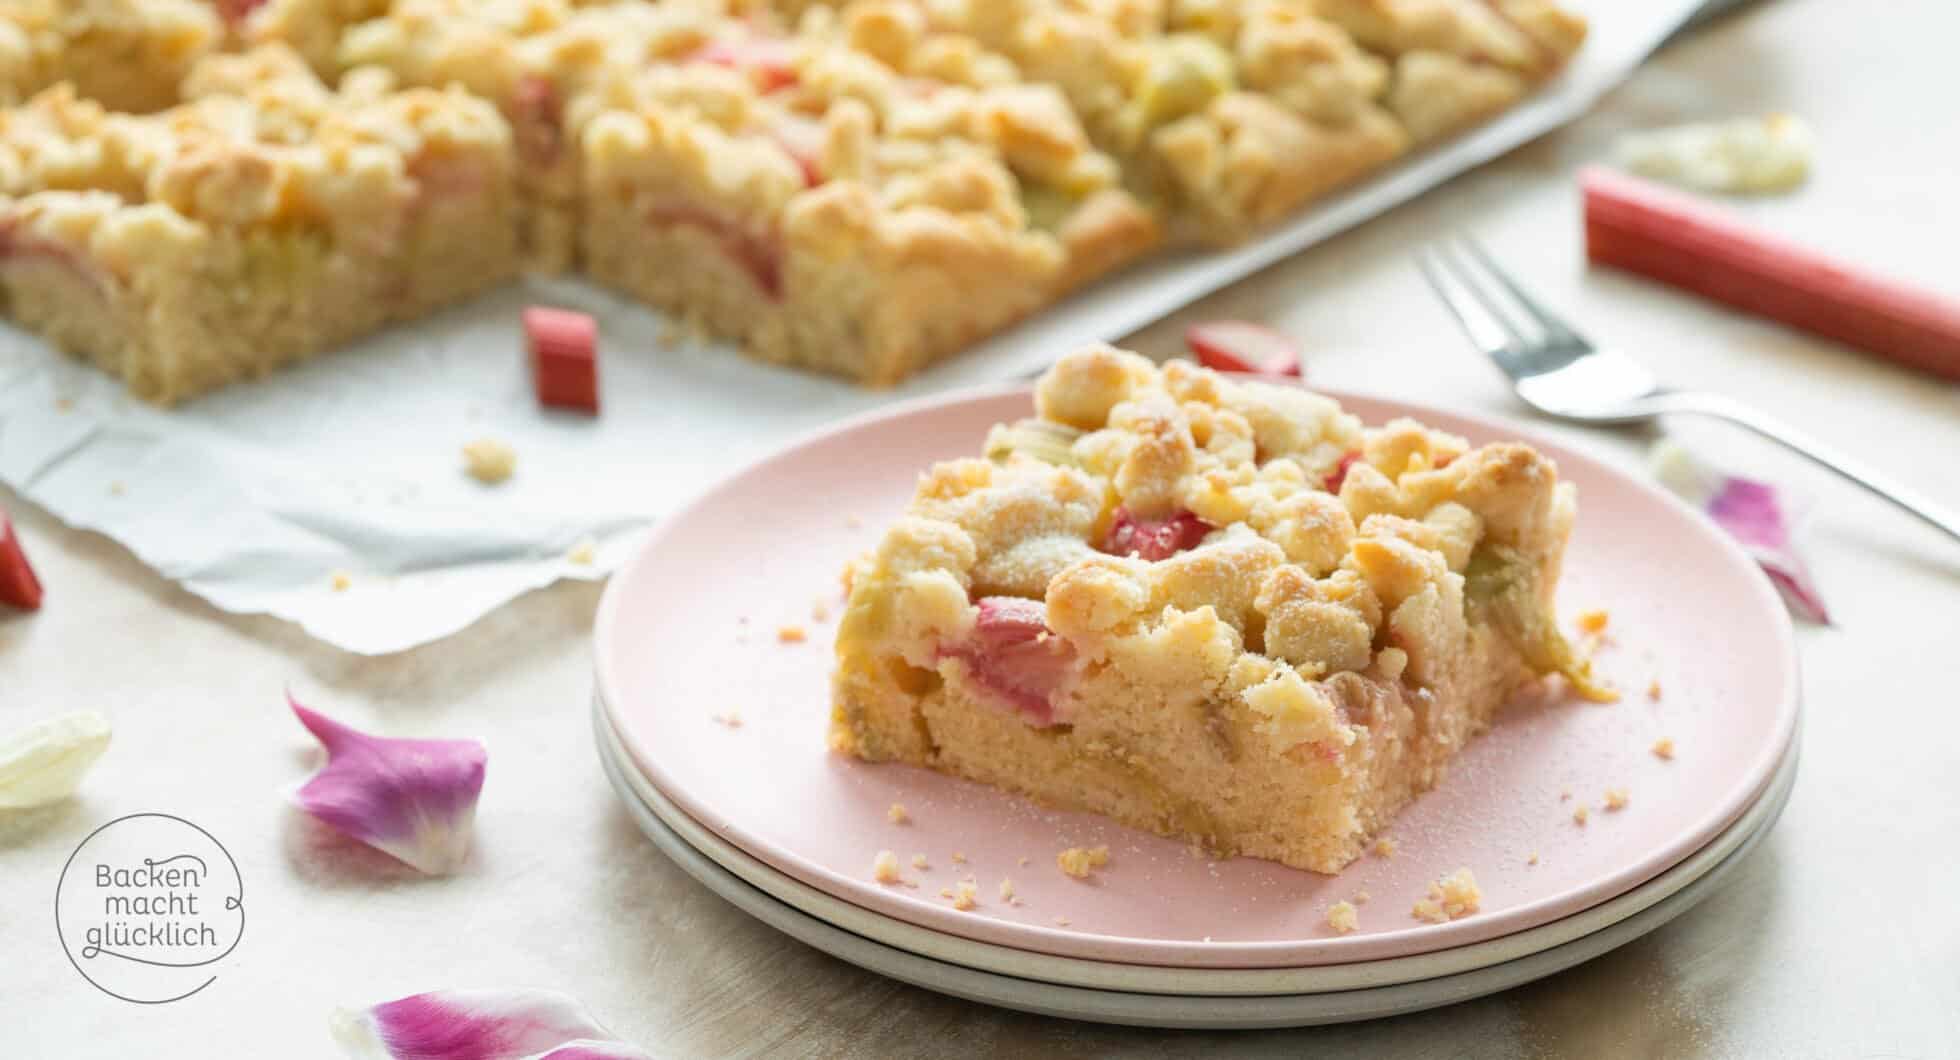 Rhubarb cake with sprinkles | Baking makes you happy - Menu Prices